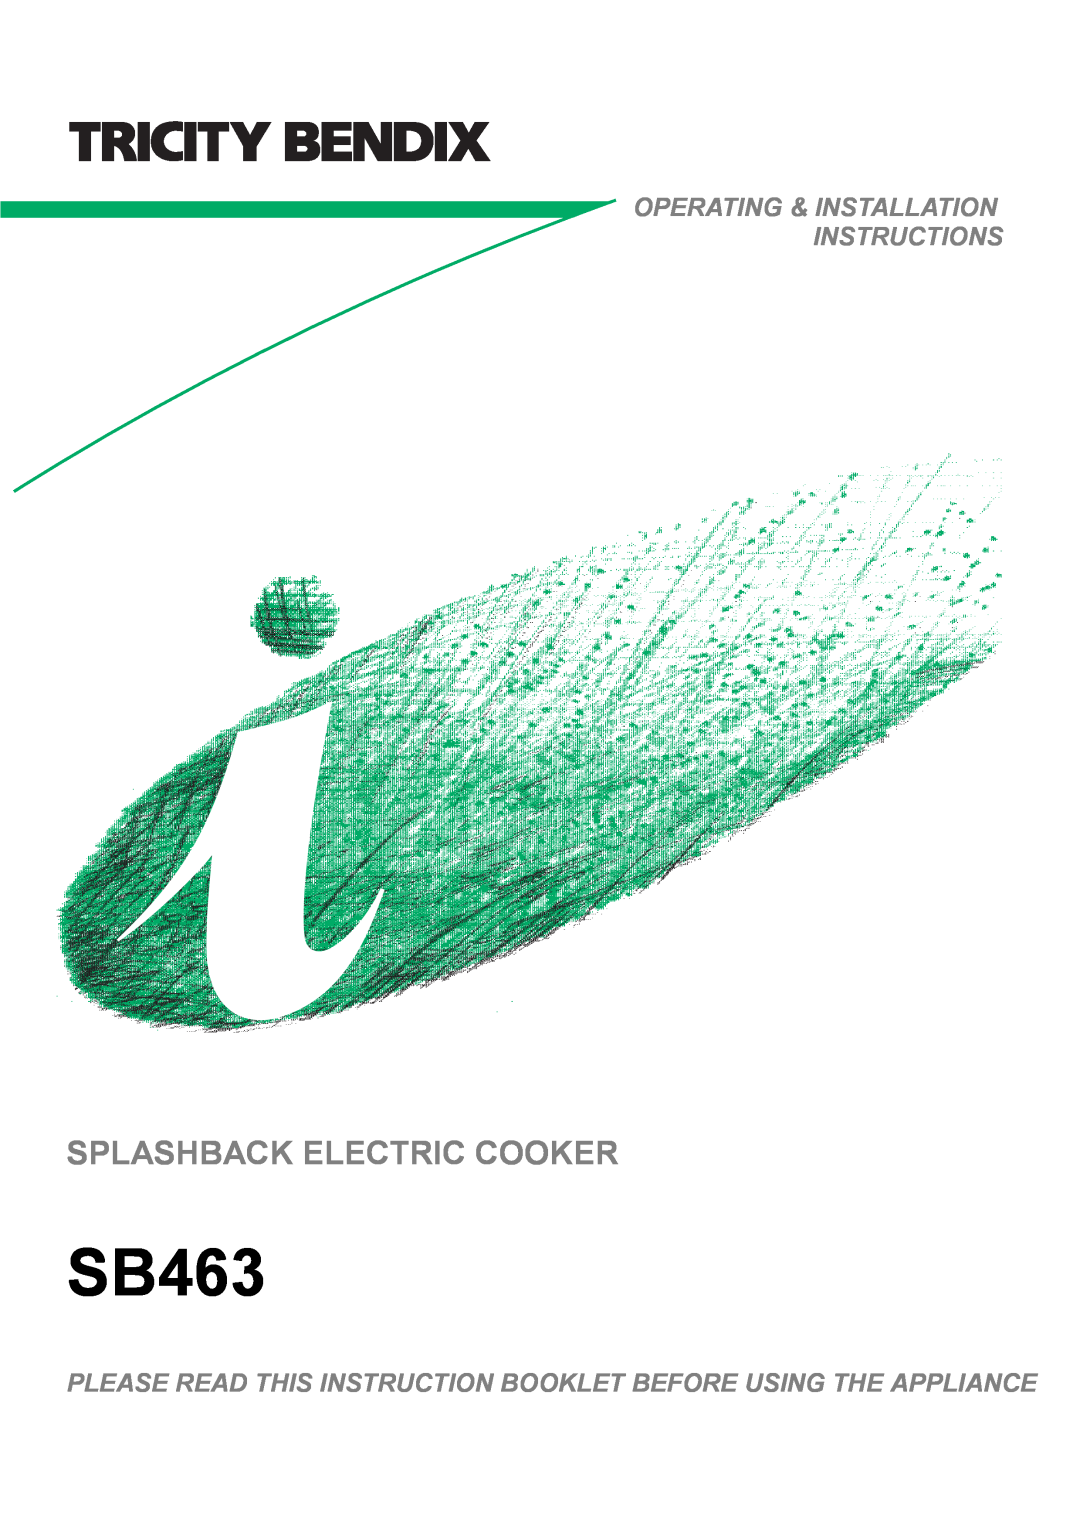 Tricity Bendix SB463 installation instructions Splashback Electric Cooker, Operating & Installation Instructions 